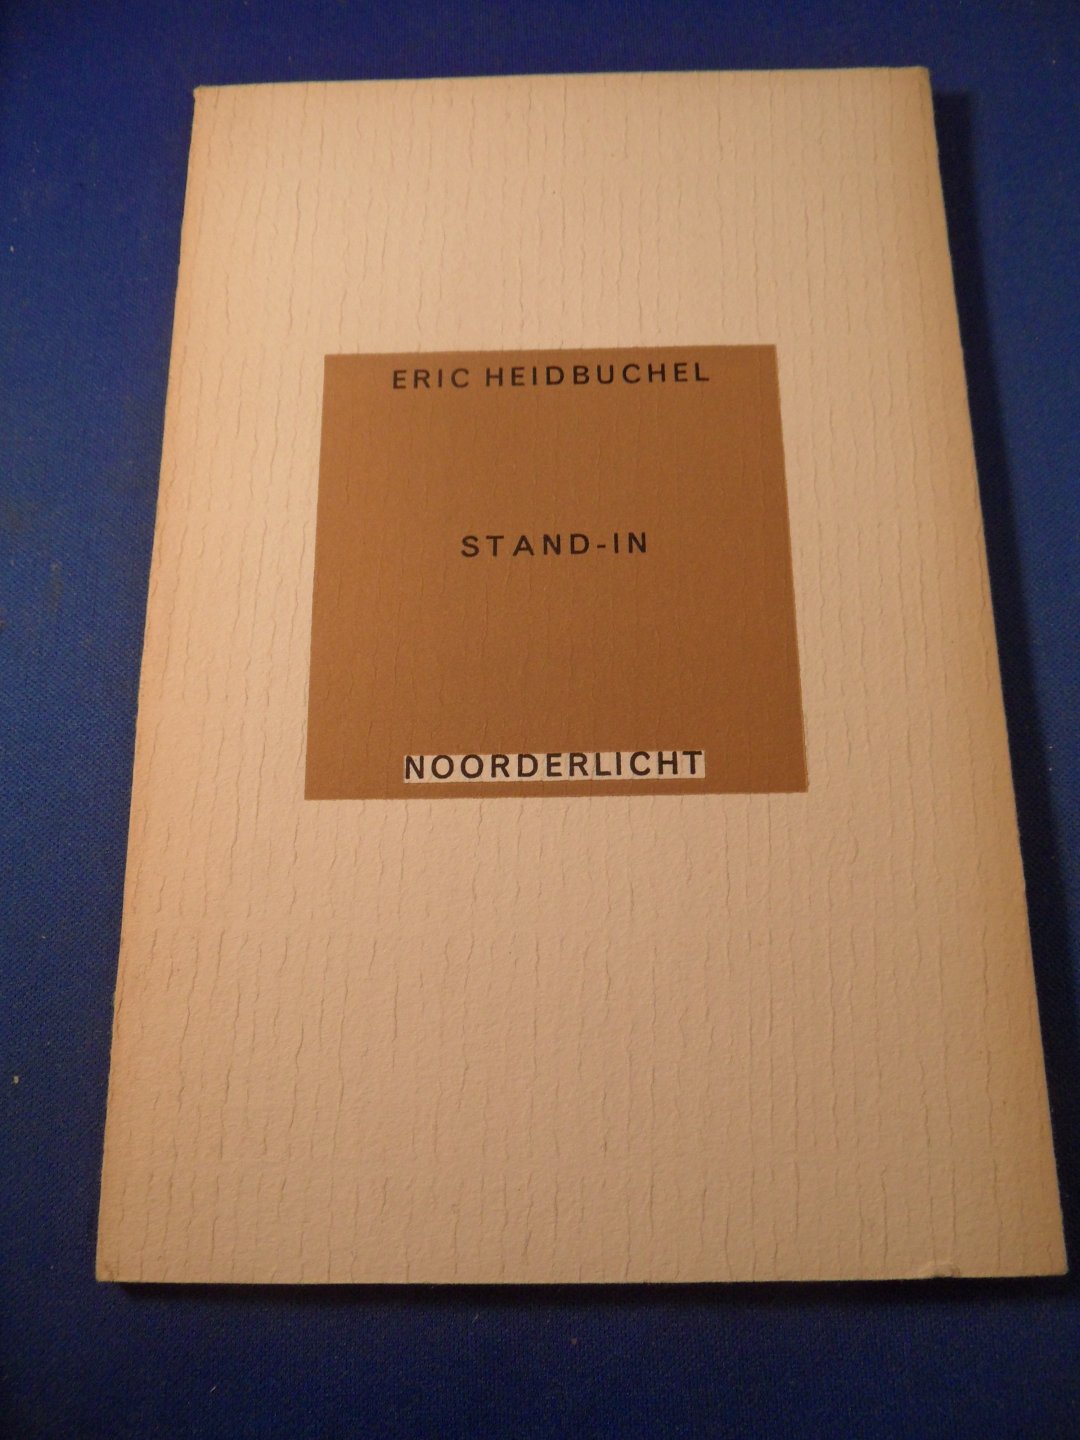 Heidbuchel, Eric - Stand-in